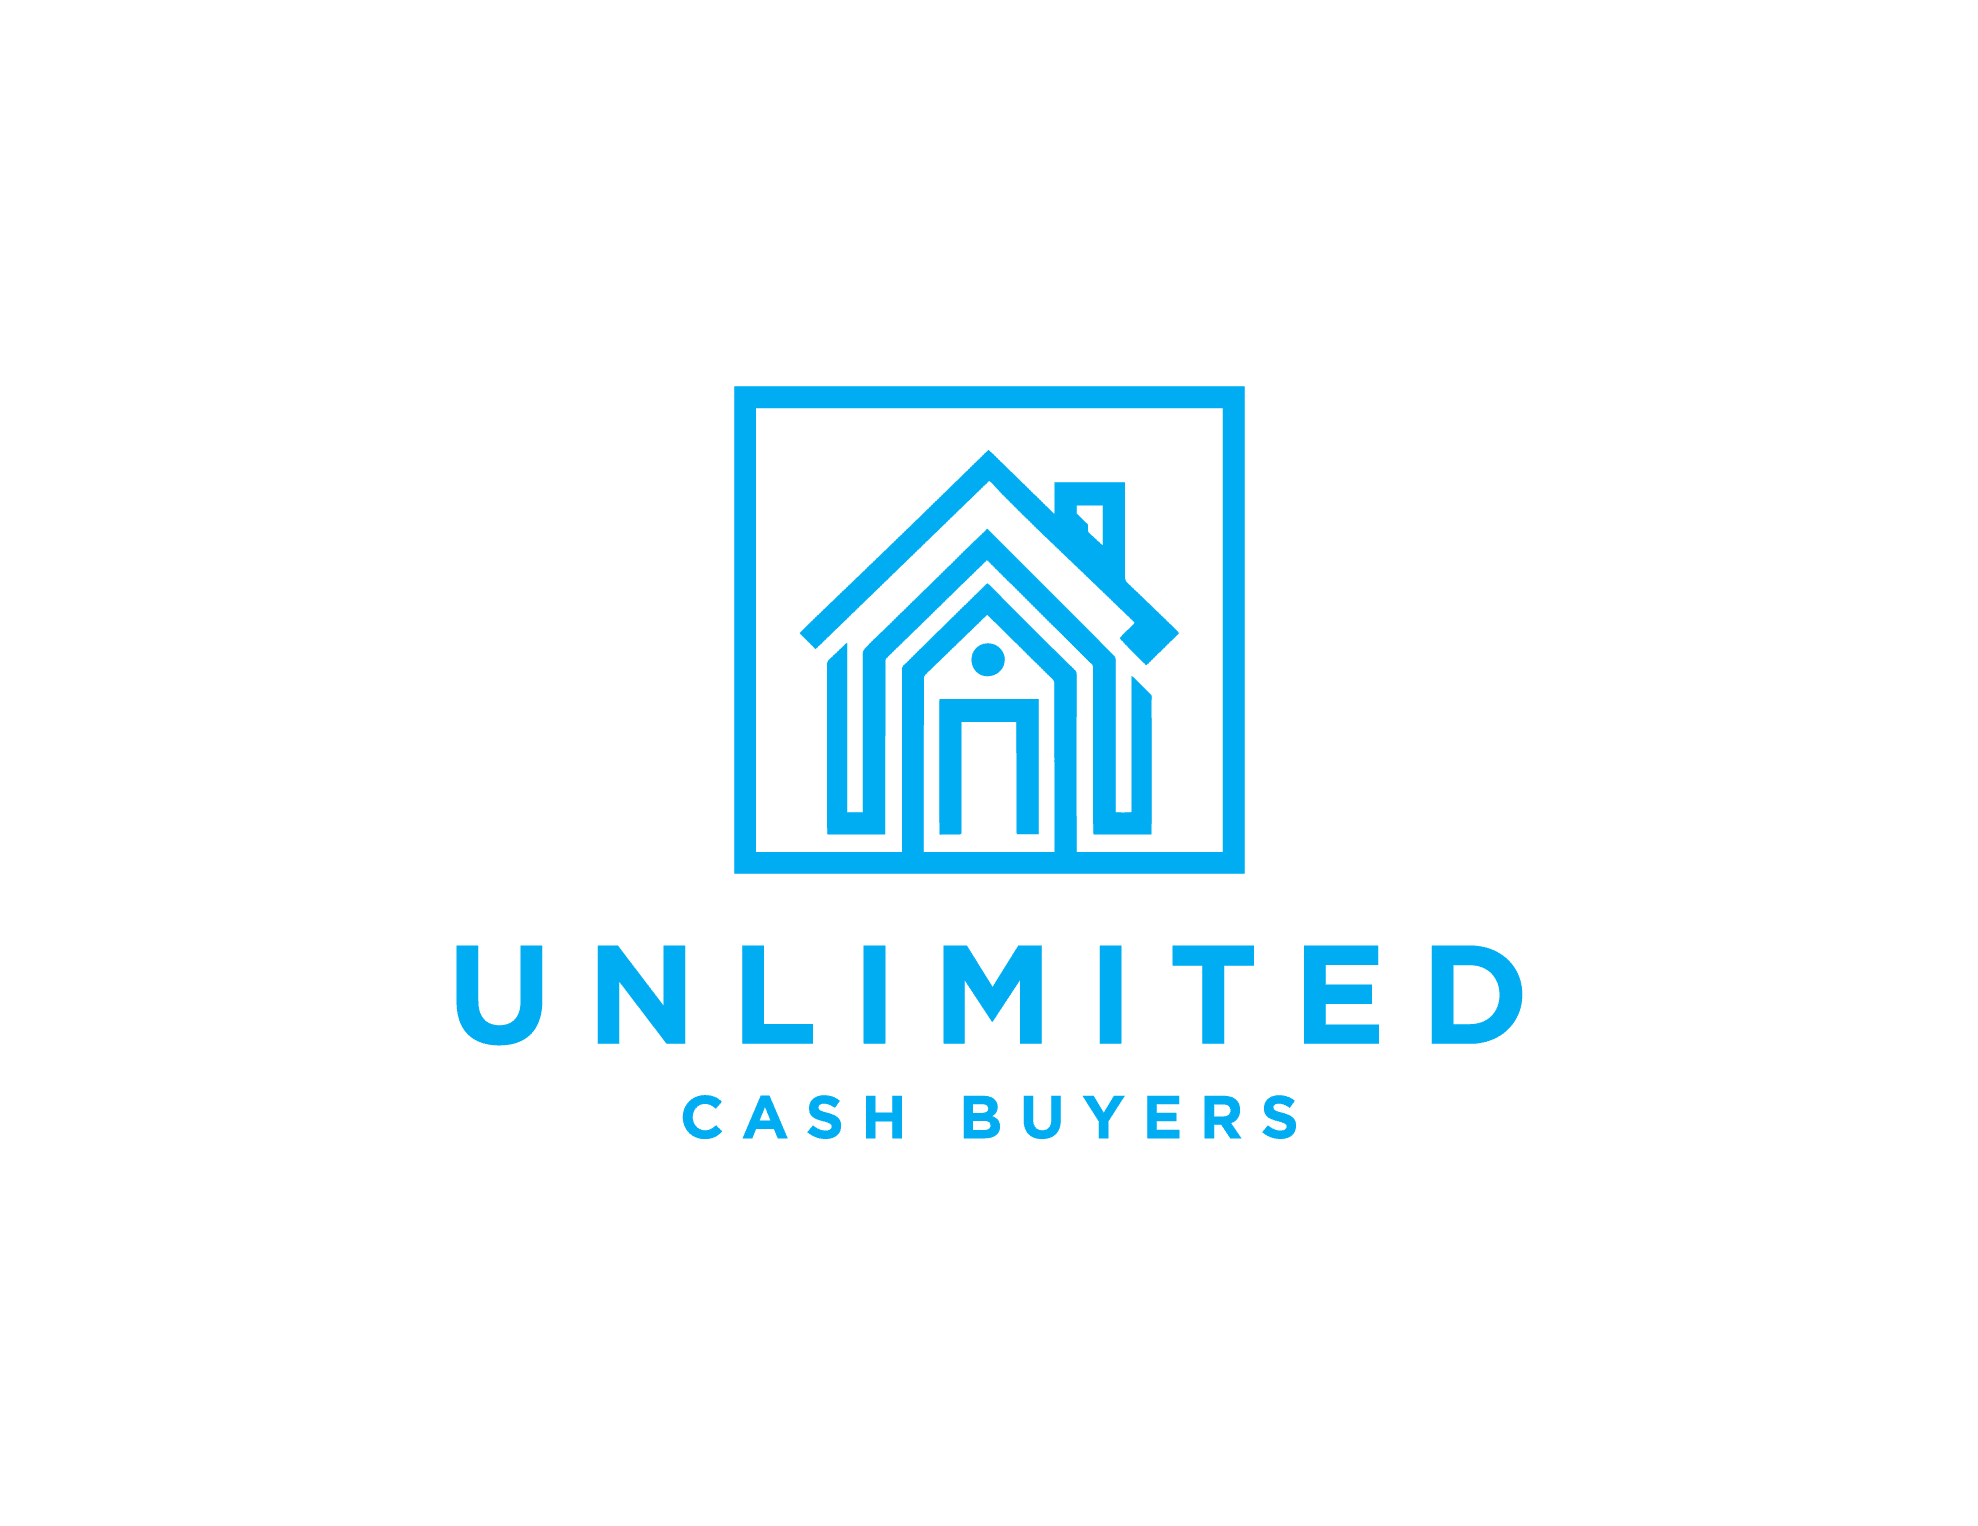 Unlimited Cash Buyers